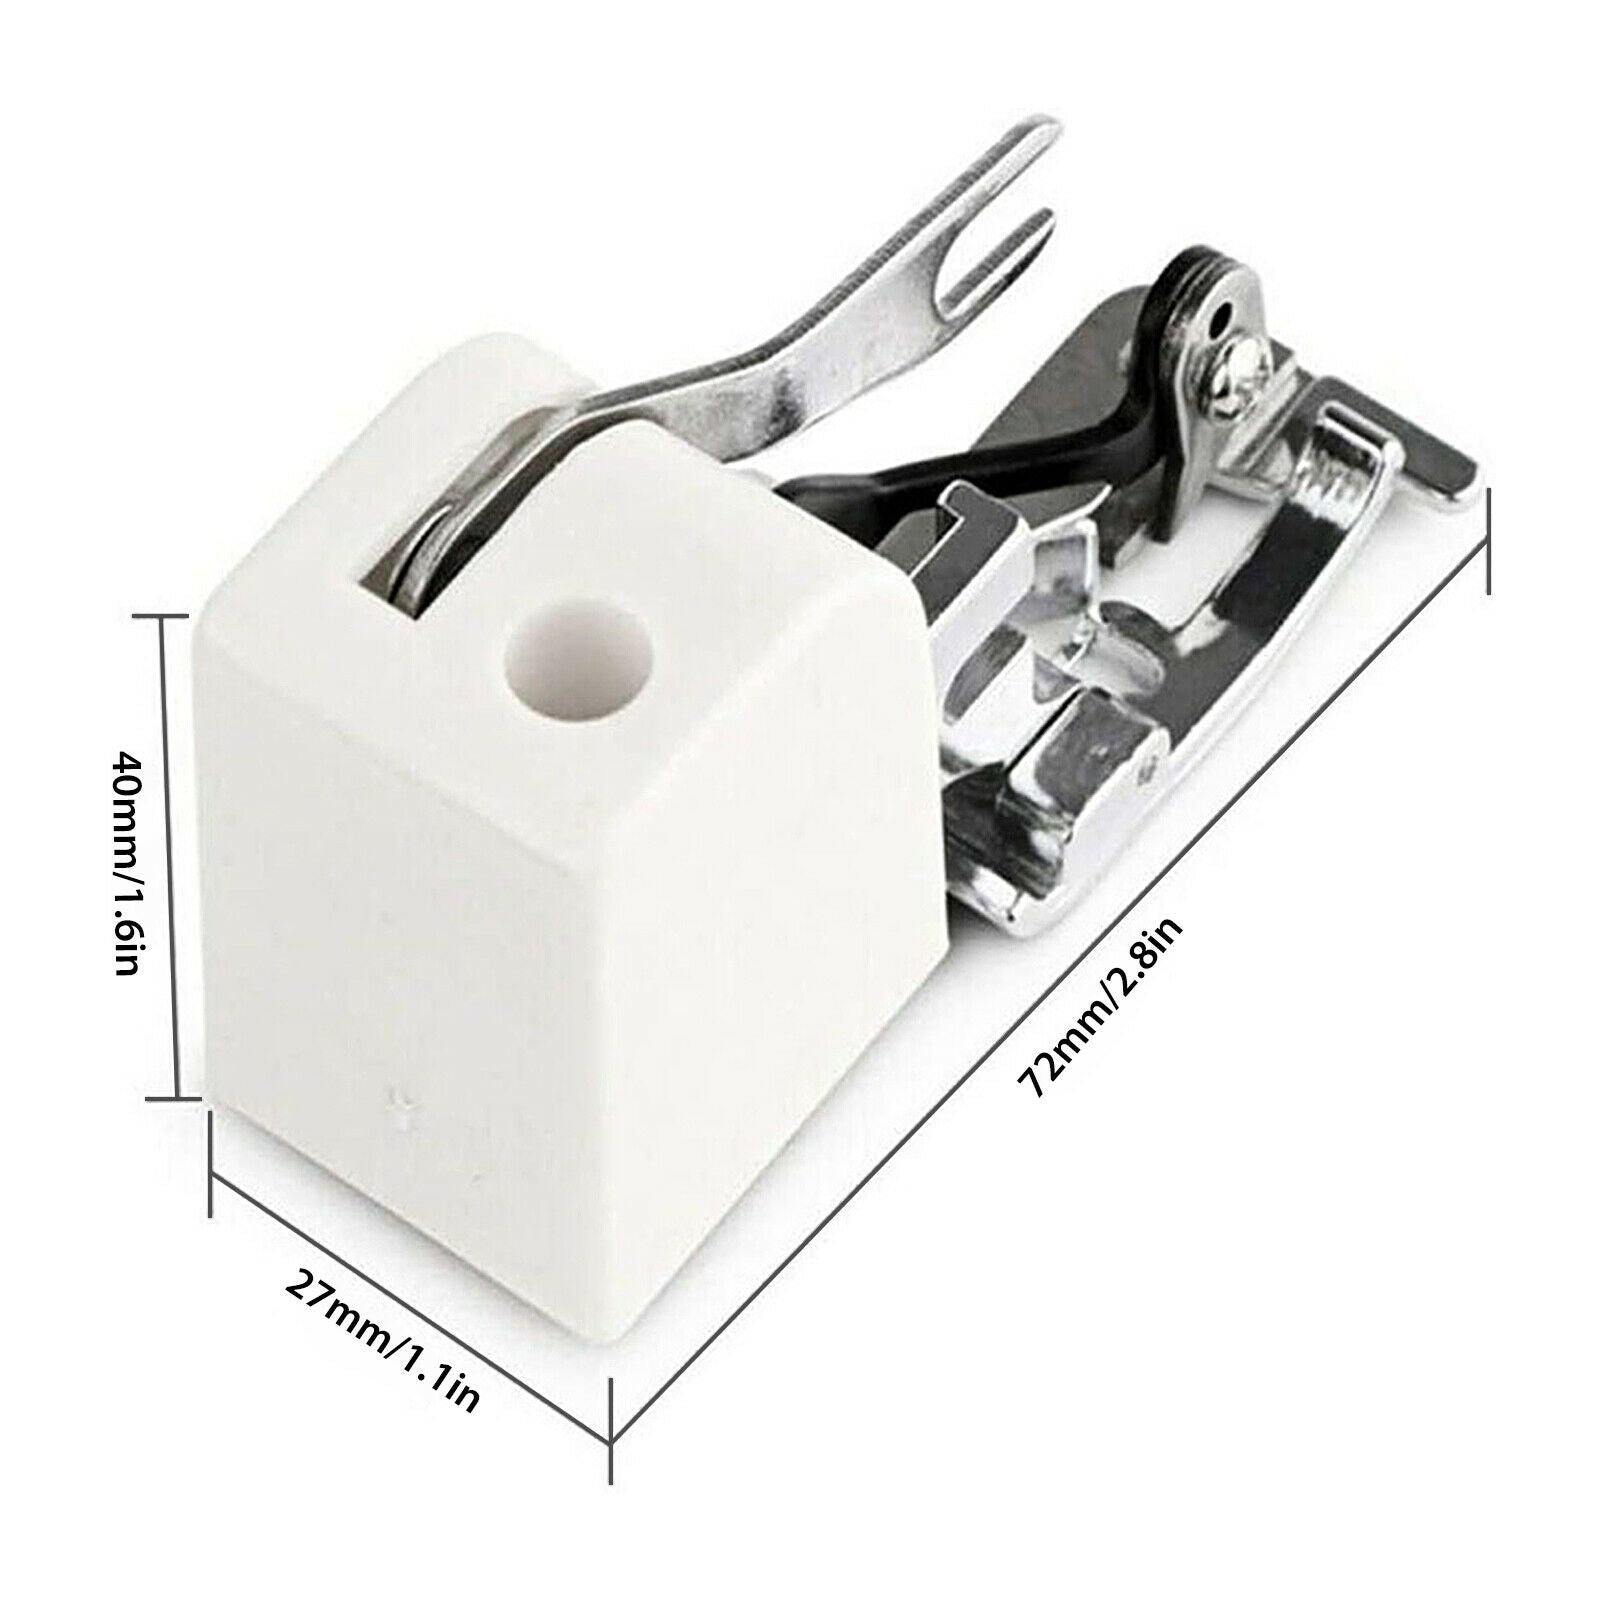 Sewing Machine Side Cutter Overlock Presser Foot Tool Household